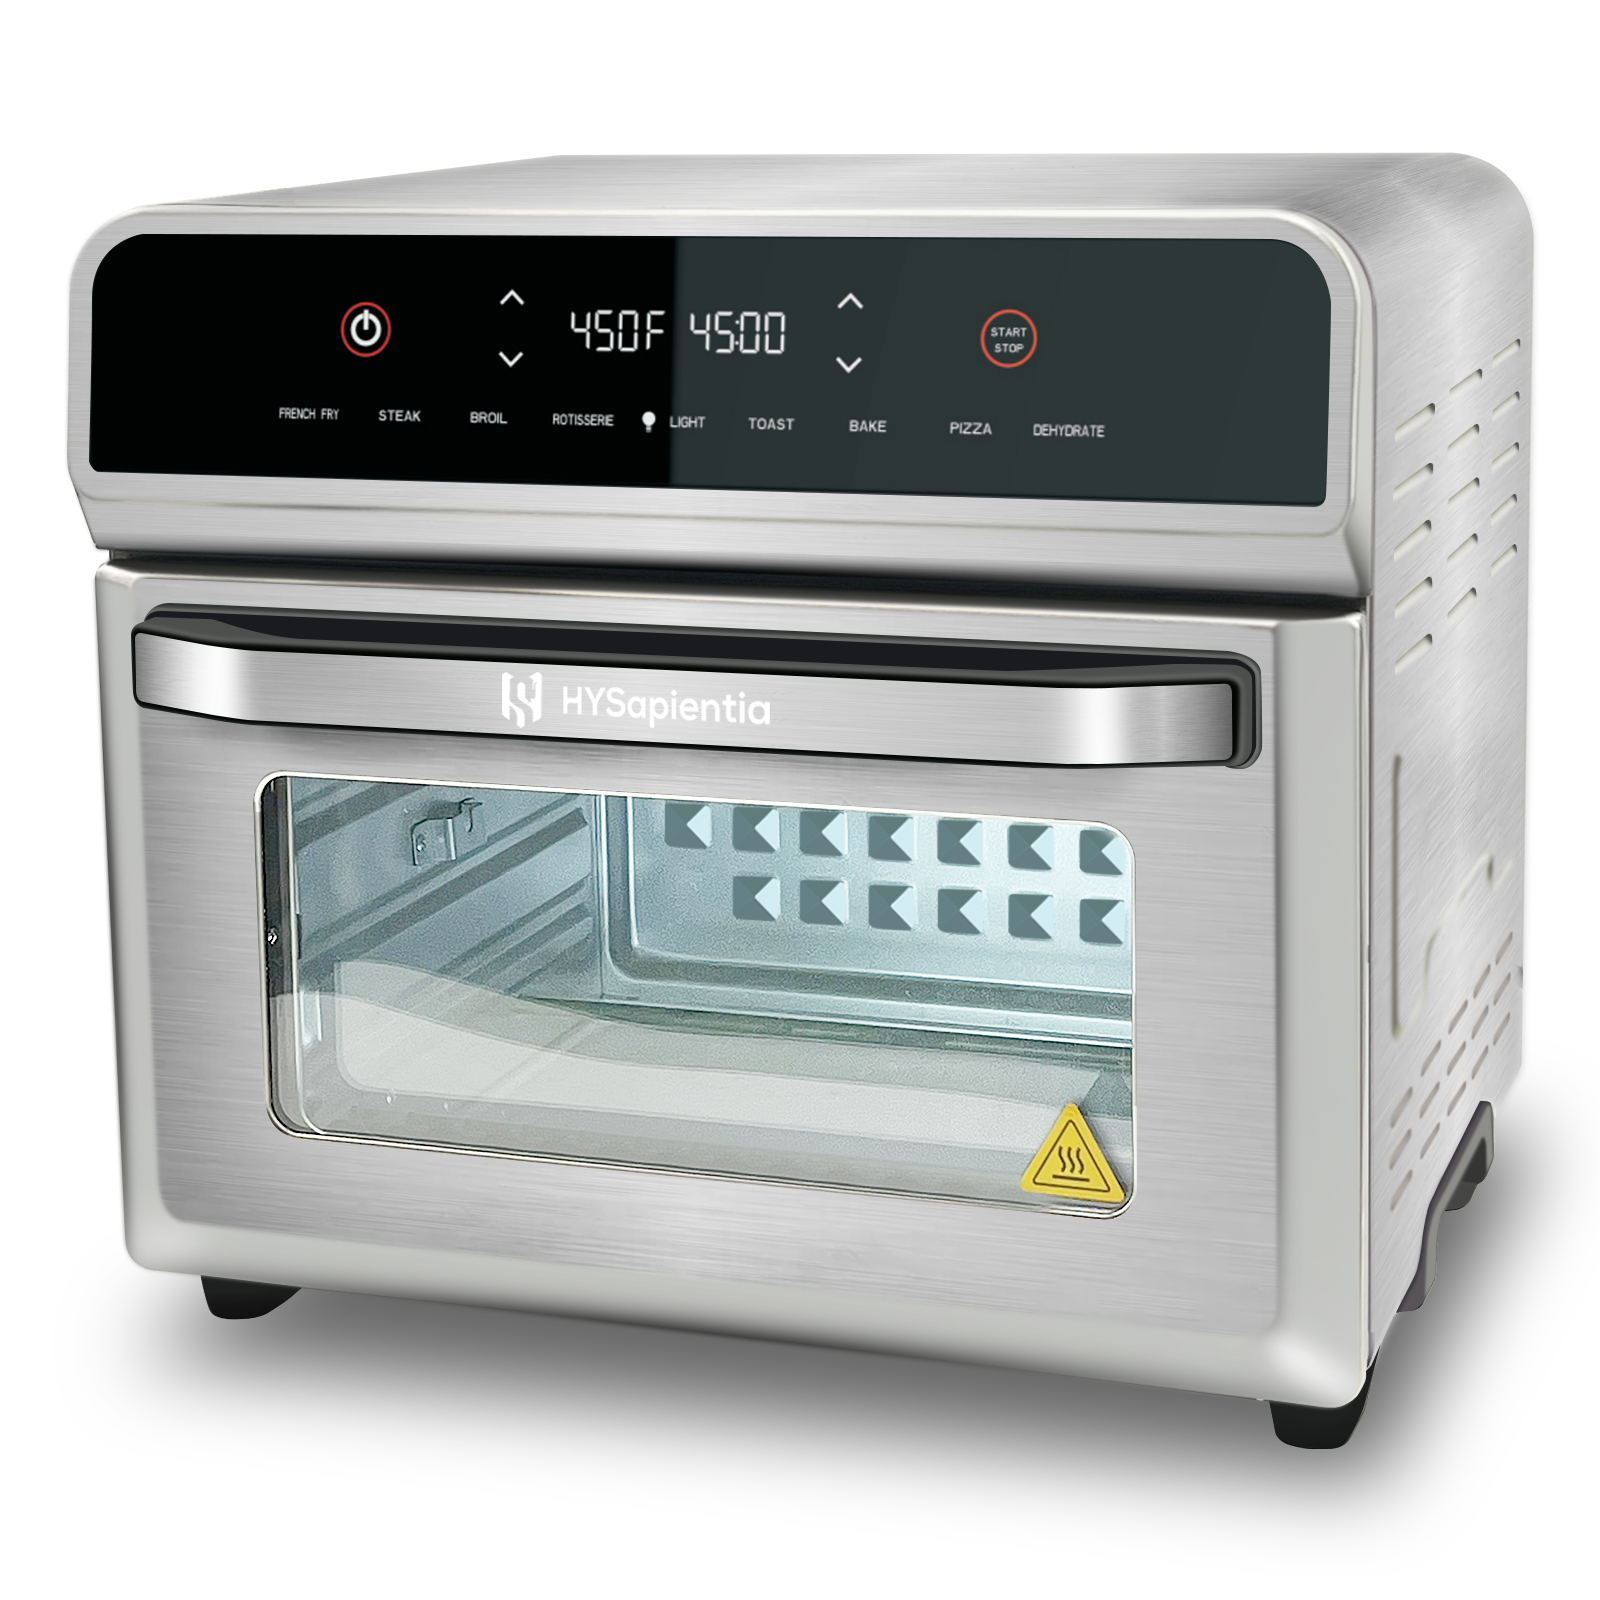 Air fryer oven vs regular oven